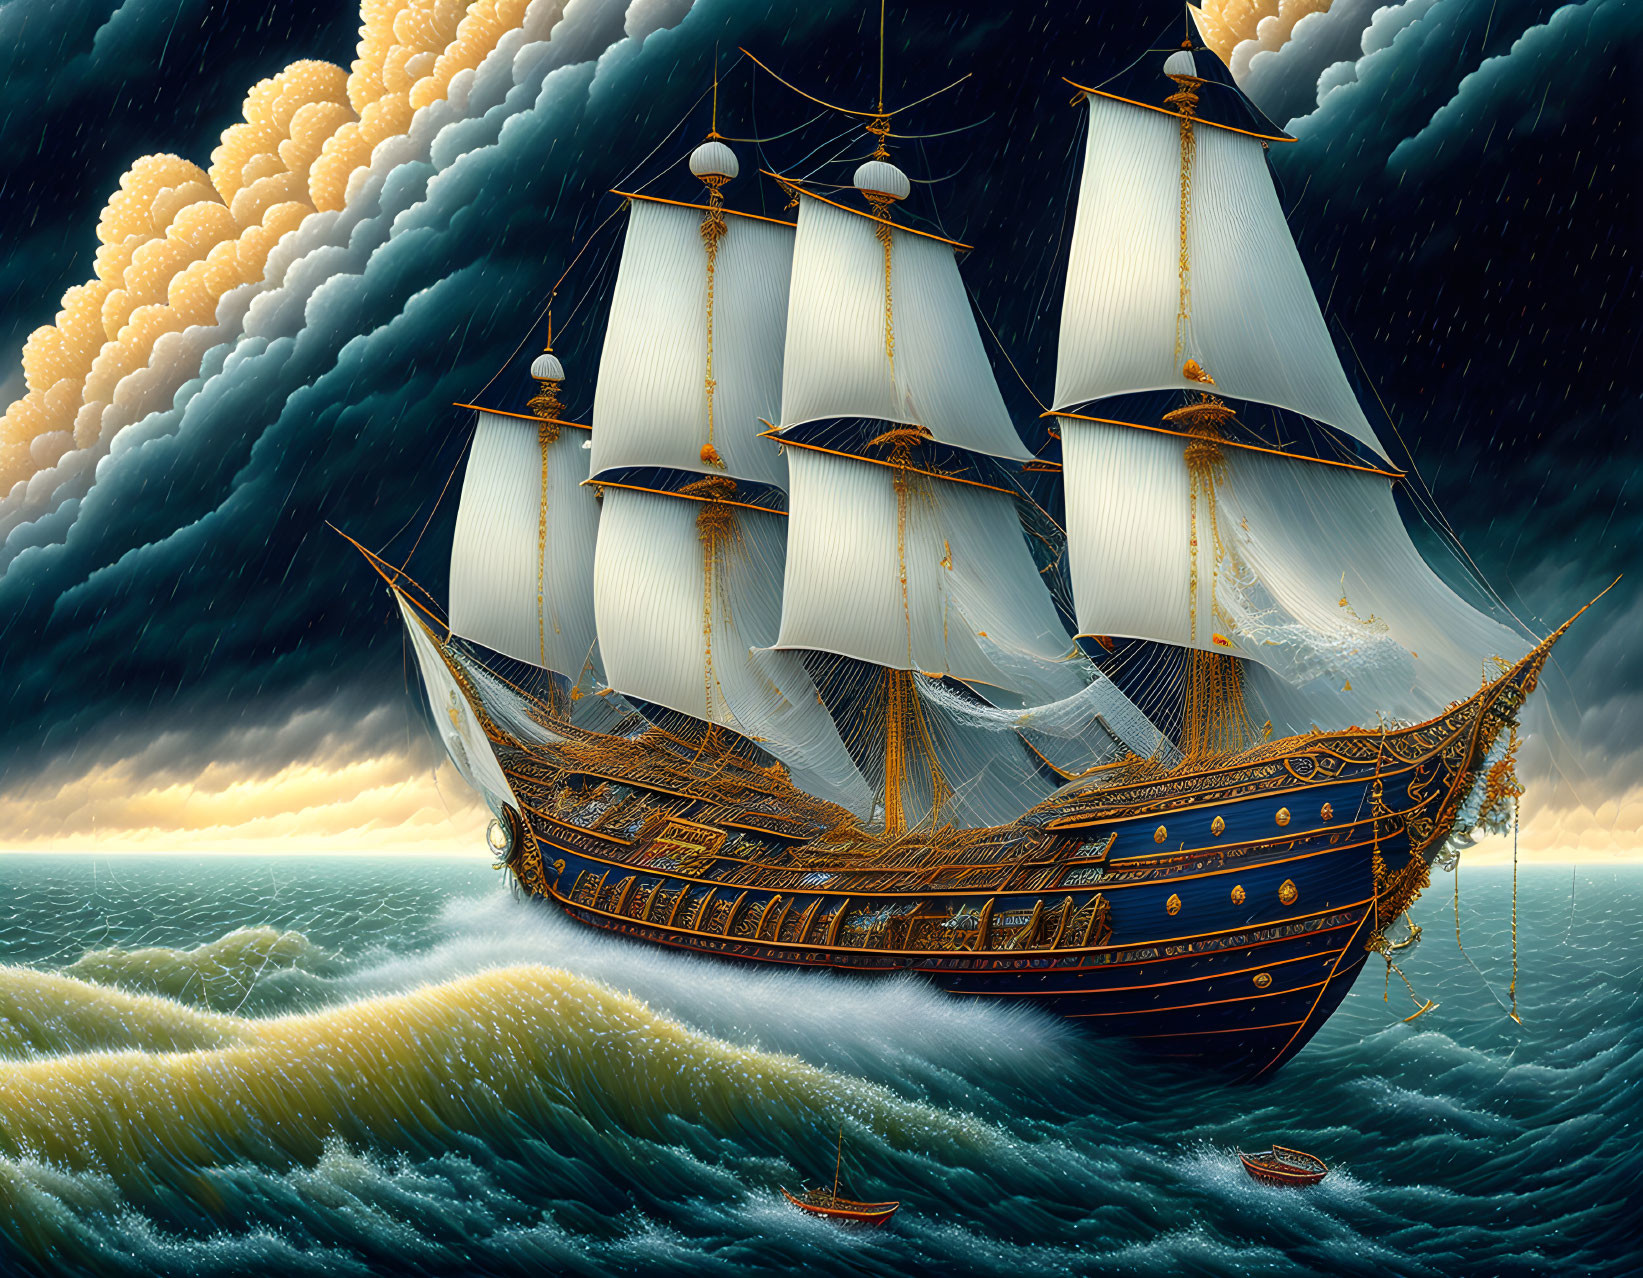 Majestic tall ship sailing turbulent seas under dramatic sky